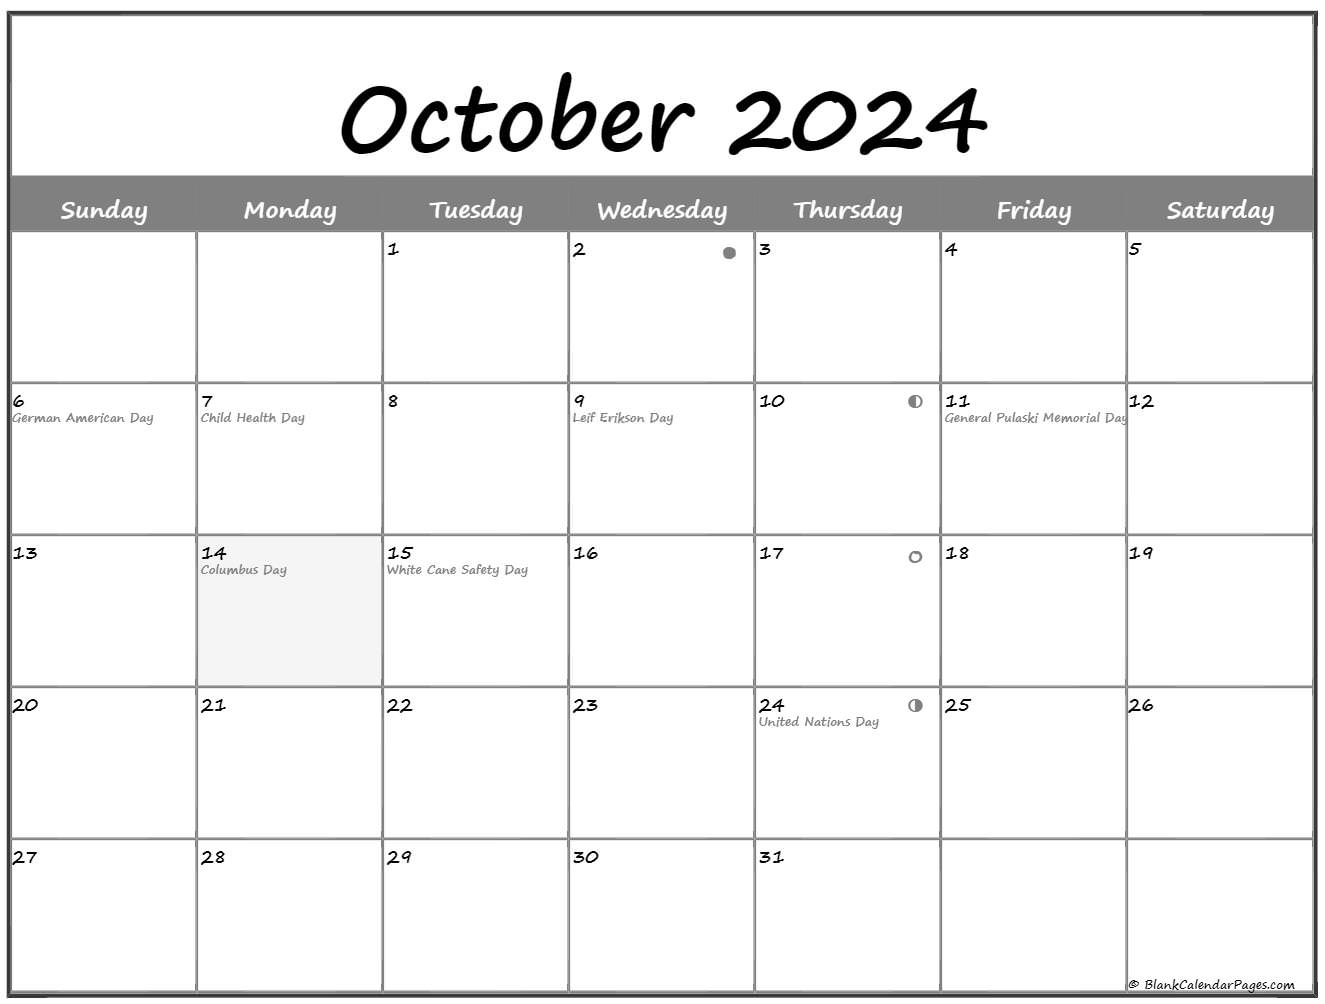 October 2019 Lunar Calendar | Moon Phase Calendar